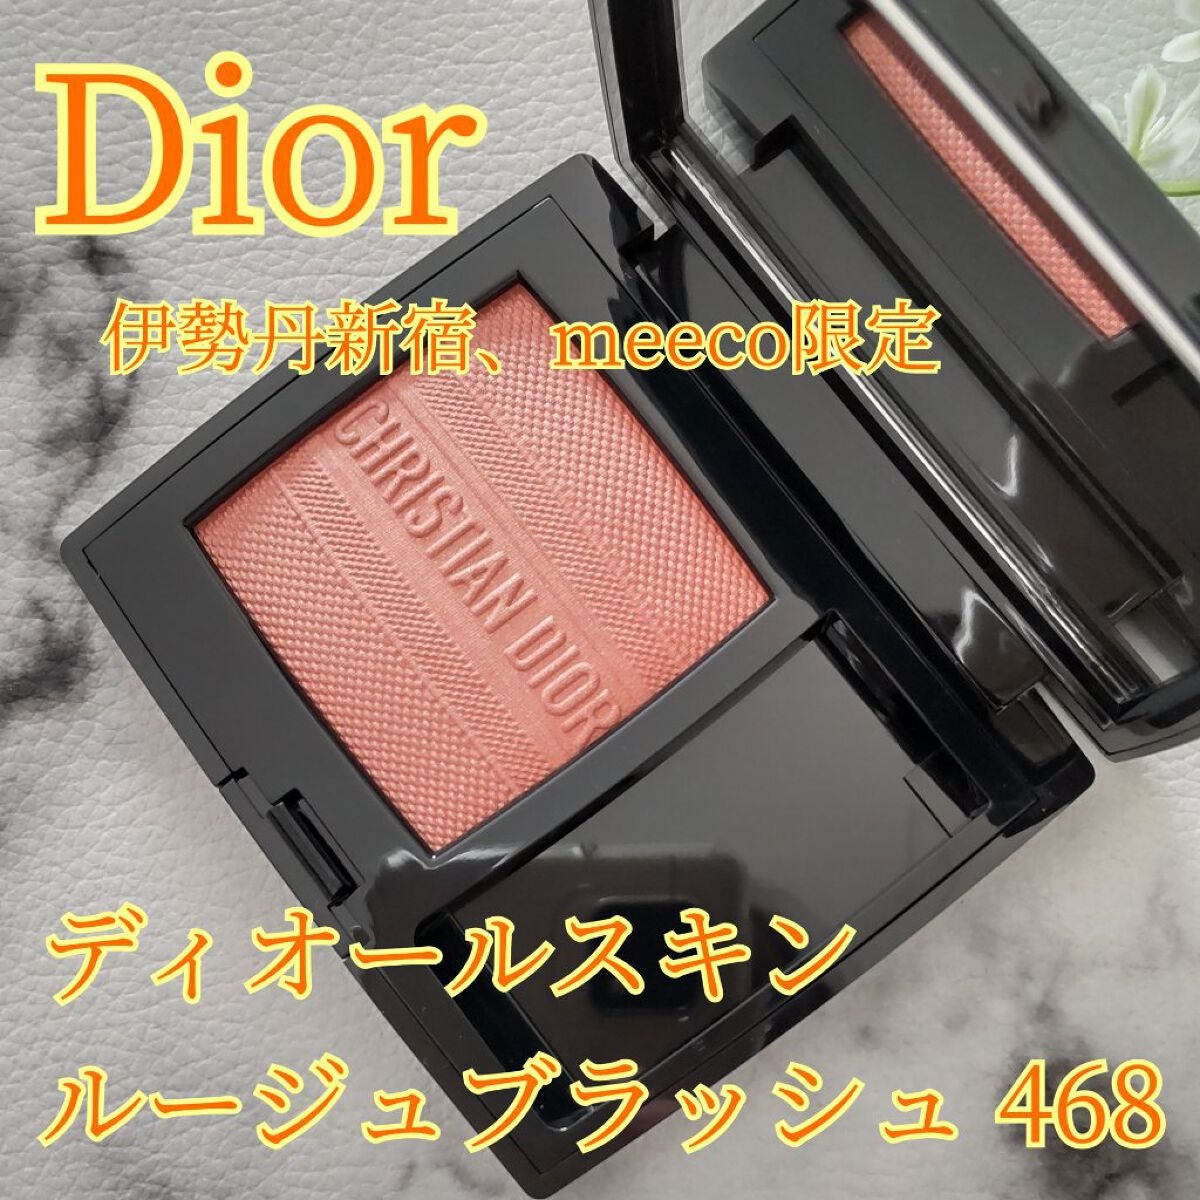 Dior 伊勢丹新宿限定 チーク www.krzysztofbialy.com